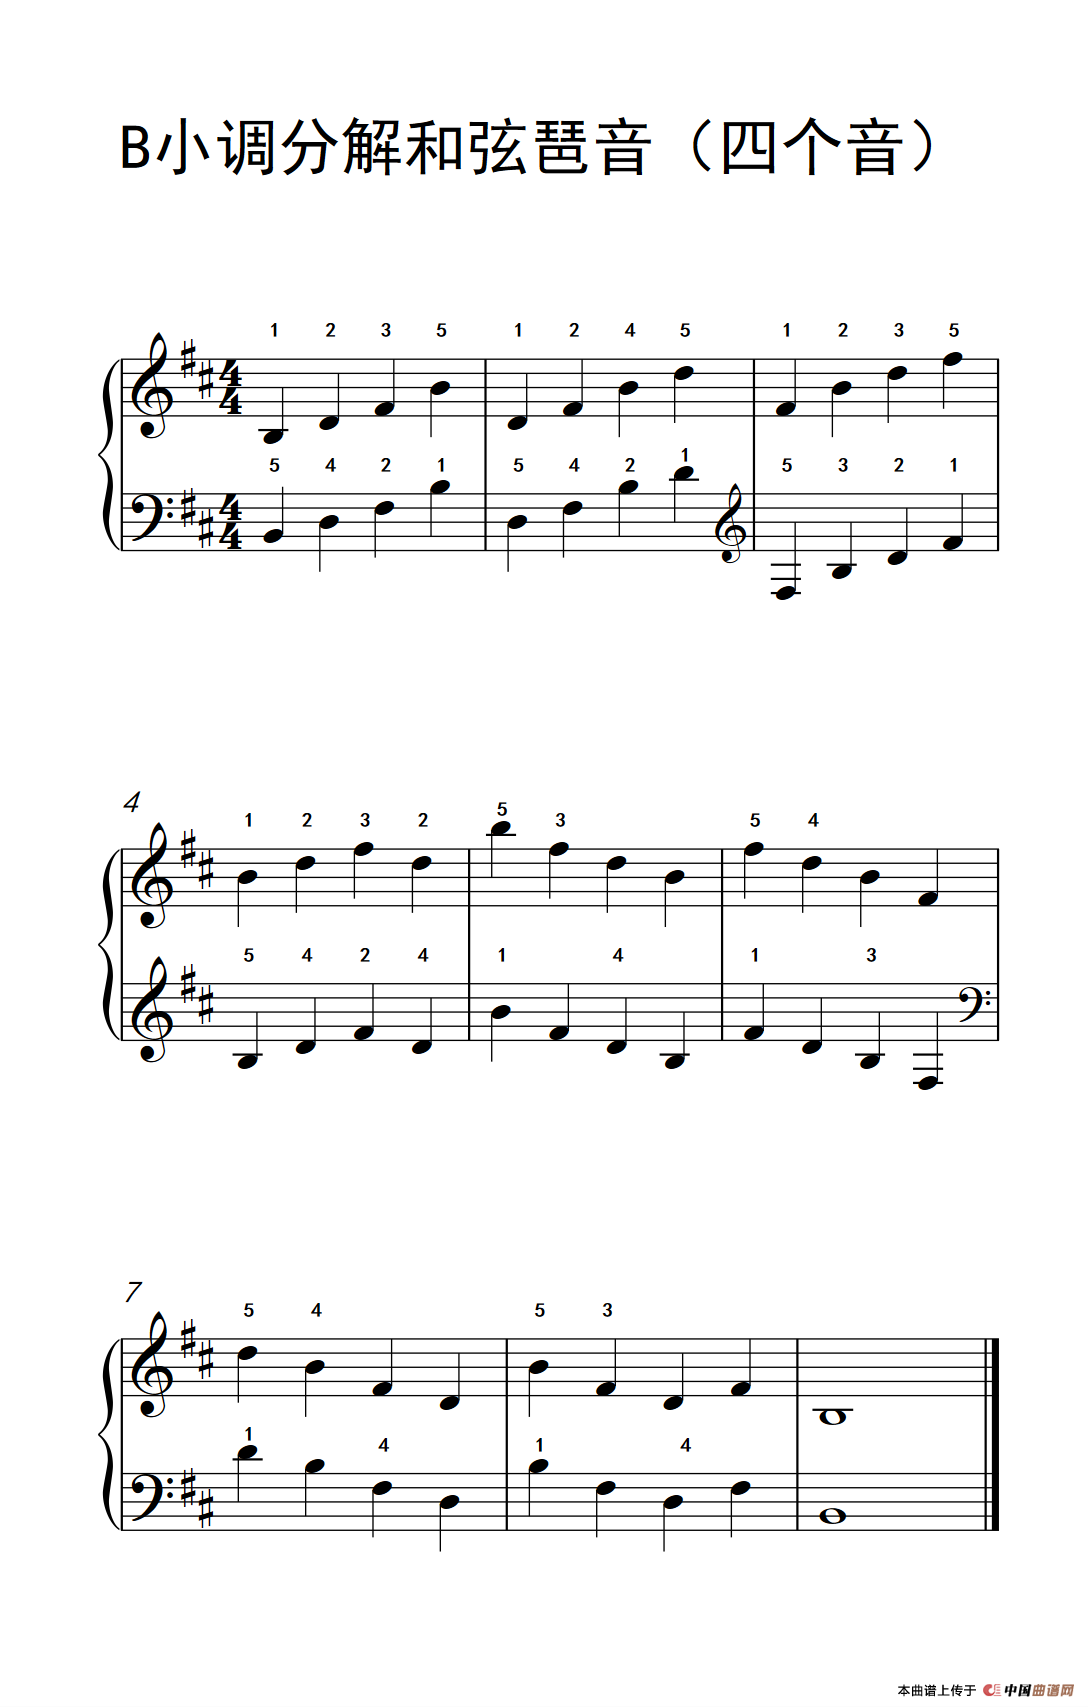 《B小调分解和弦琶音》钢琴曲谱图分享